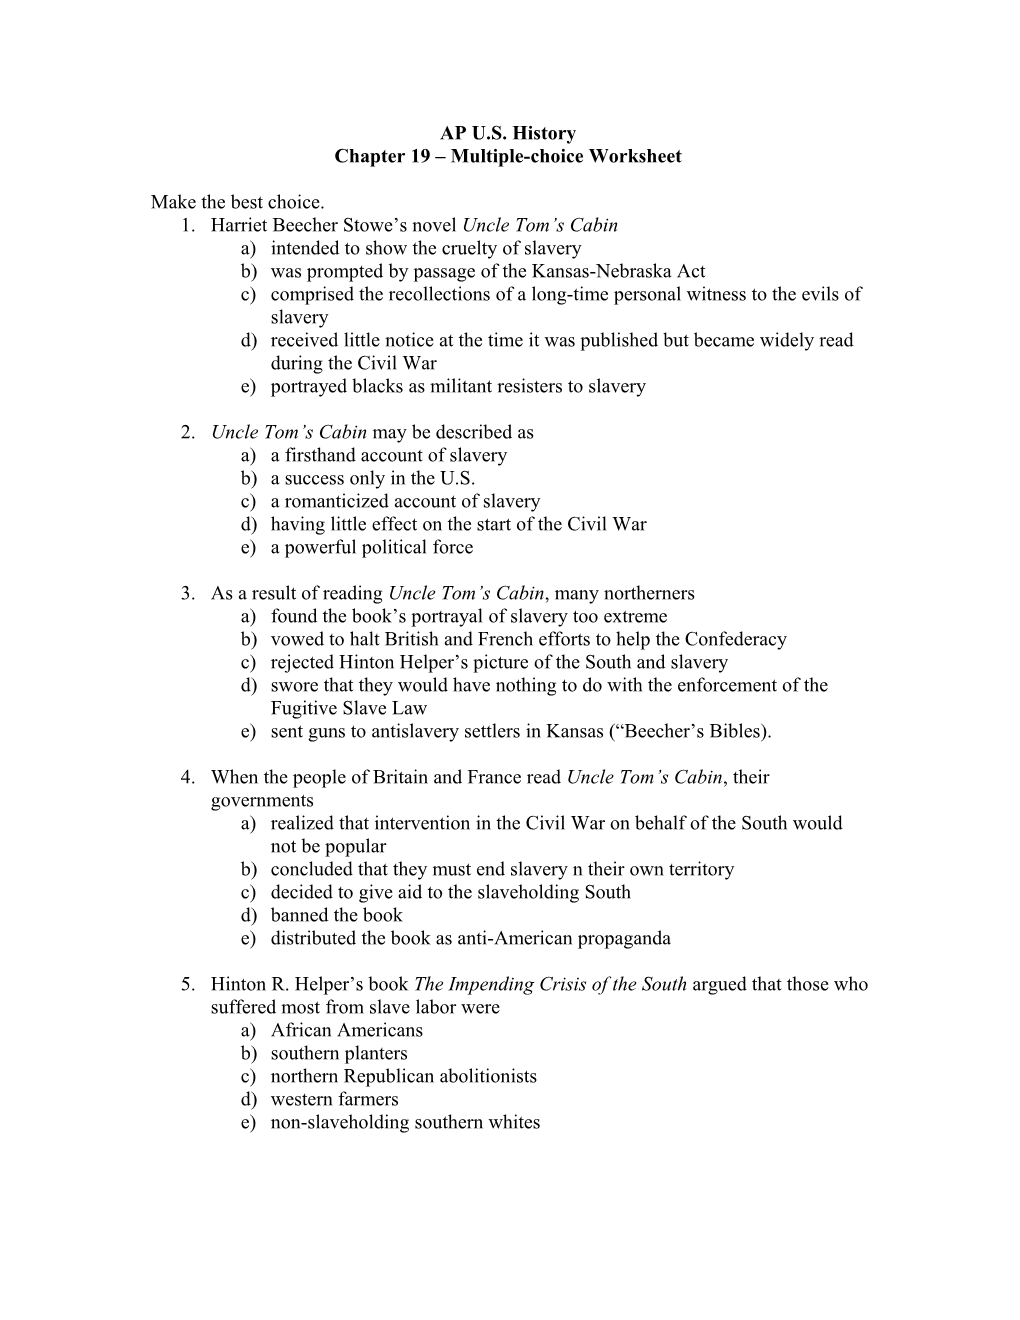 Chapter 19 Multiple-Choice Worksheet